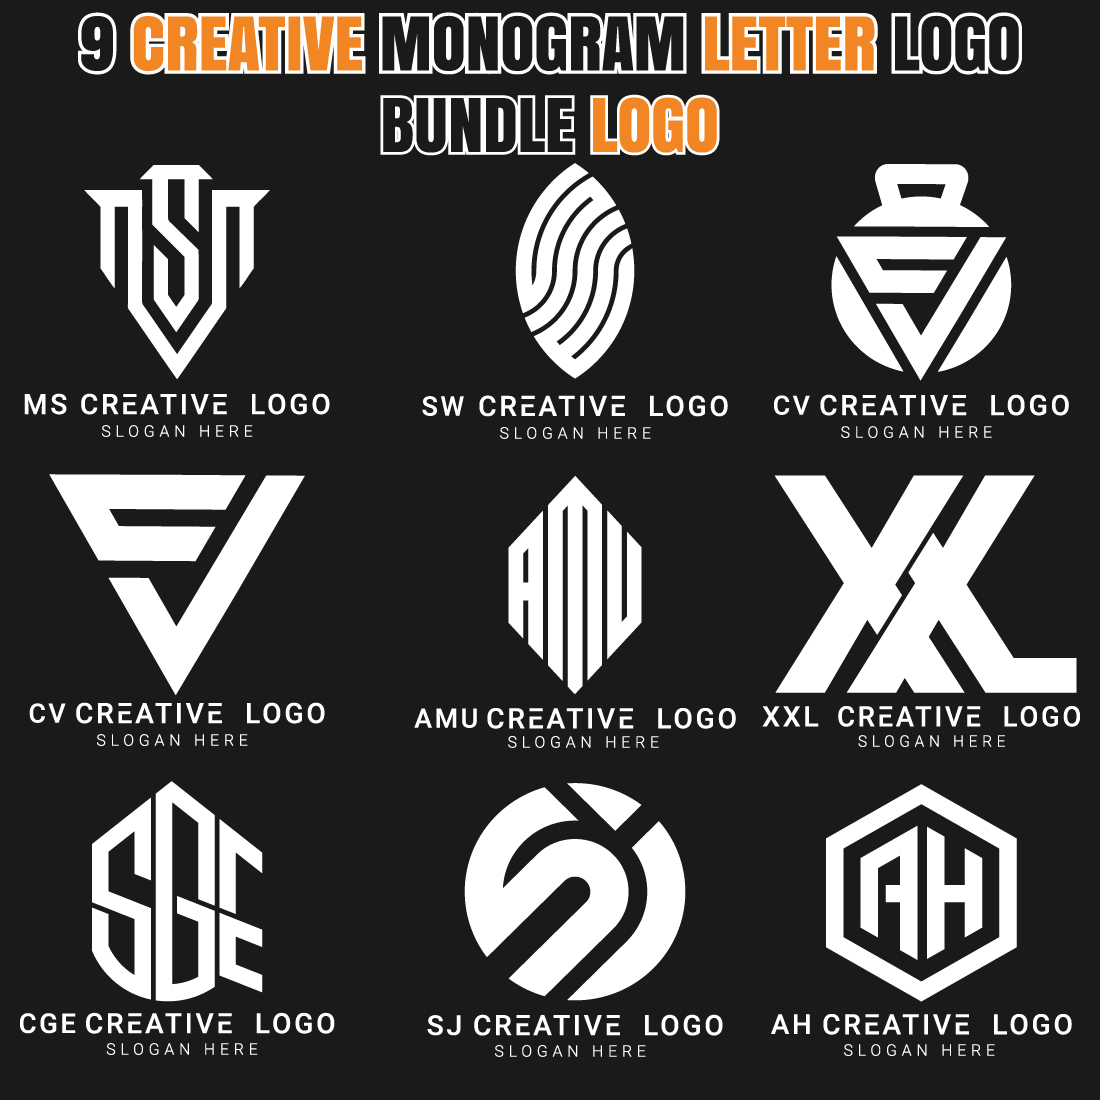 9 Creative Monogram Letter Logo Bundle cover image.